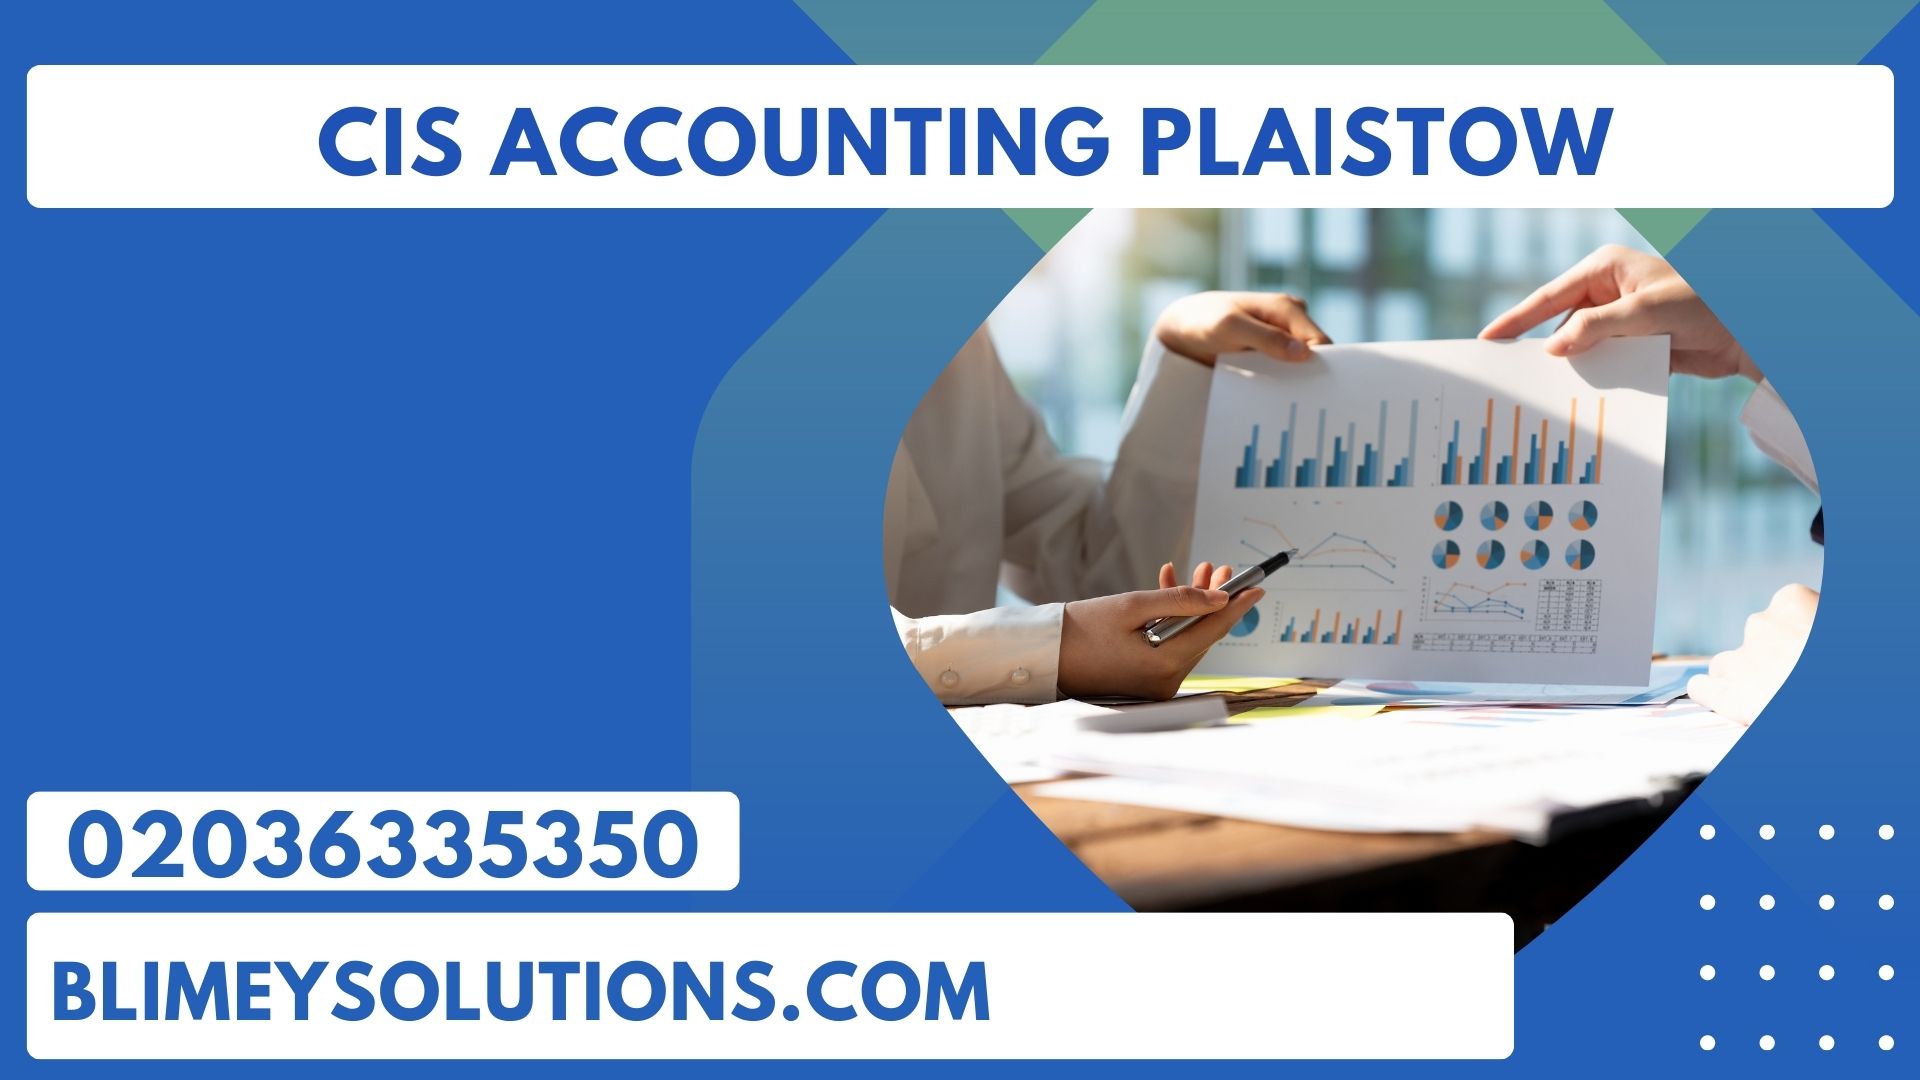 CIS Accounting in Plaistow E13 London